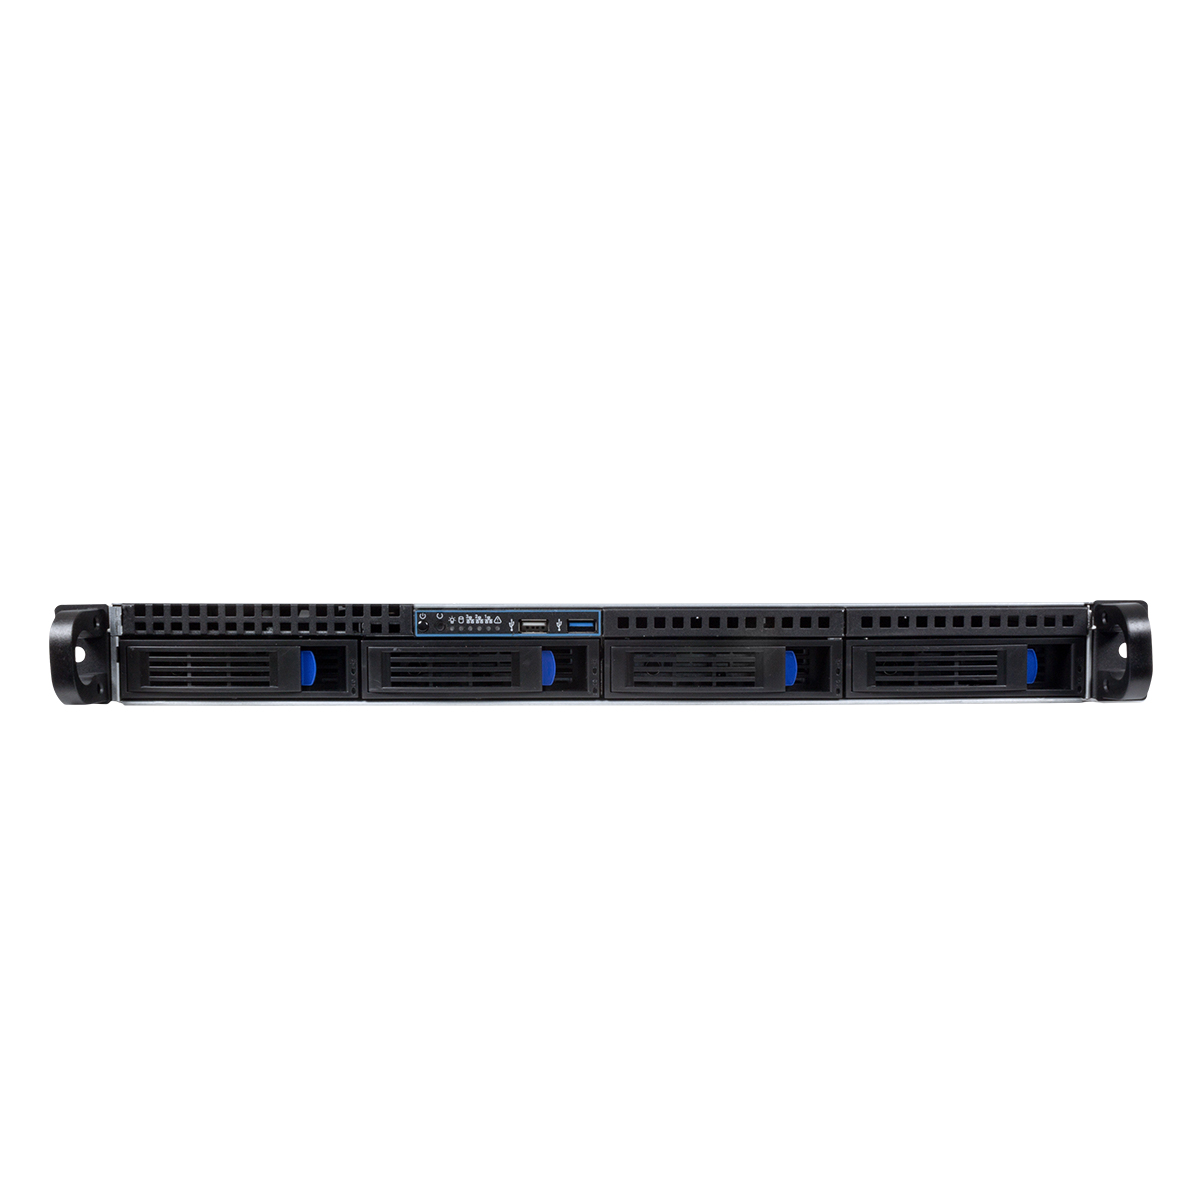 Unykach HSW4104 1U Server 1U Rack - Tailles de lecteur prises en charge 2,5", 3,5" - Cartes mères compatibles EEB, CEB, ATX, MicroATX - USB-A 2.0/3.2